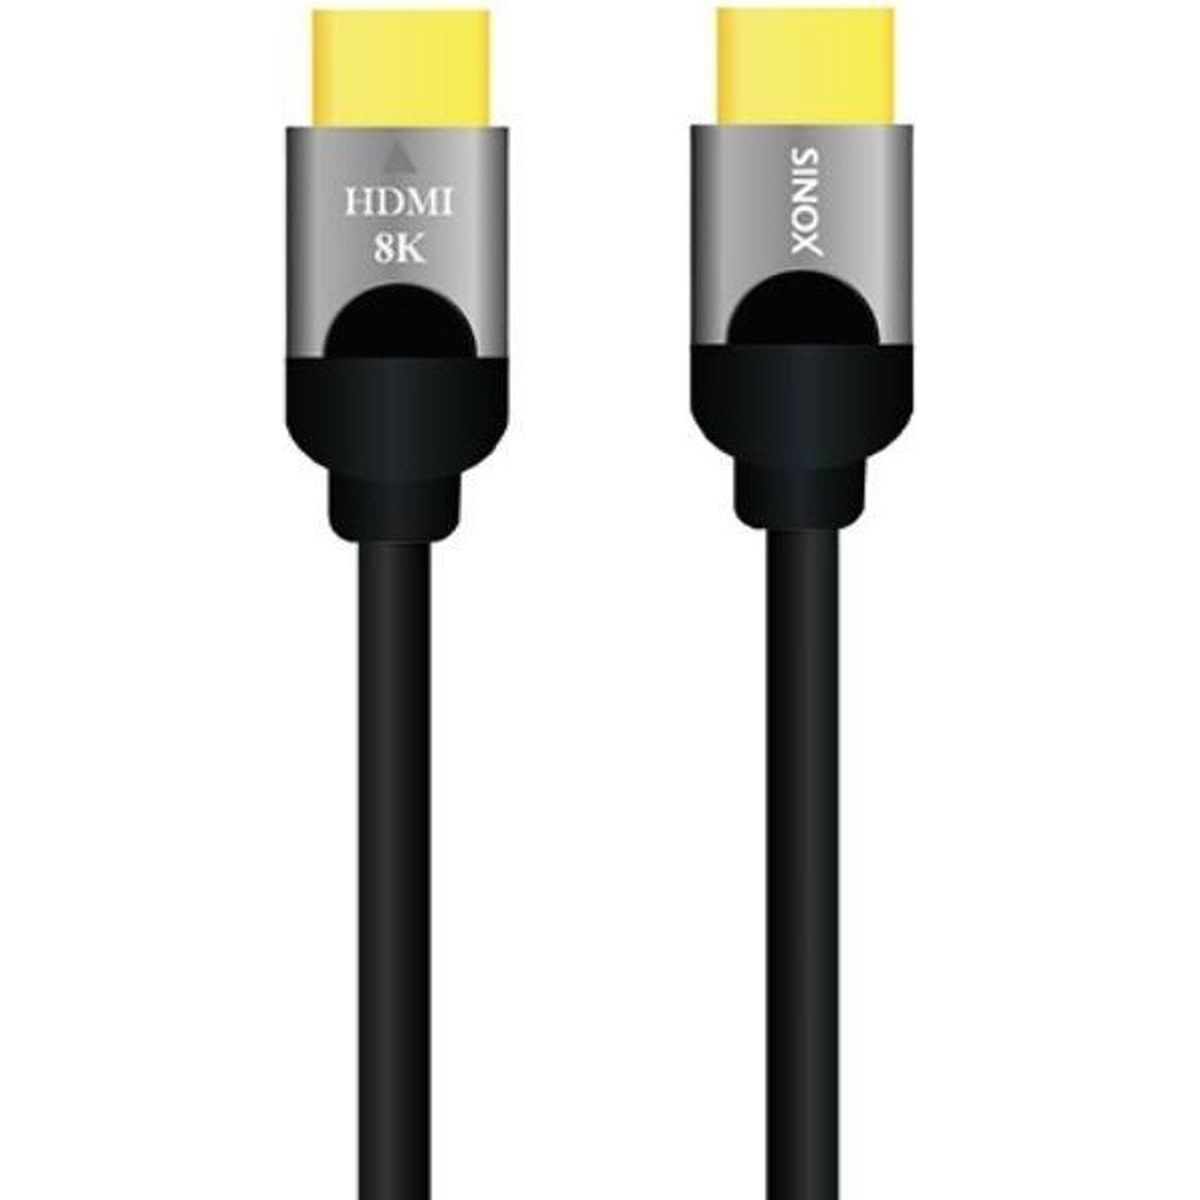 Sinox 1M SHD Ultra HD HDMI 2.1 Cable - Black | SHD3071 from Sinox - DID Electrical